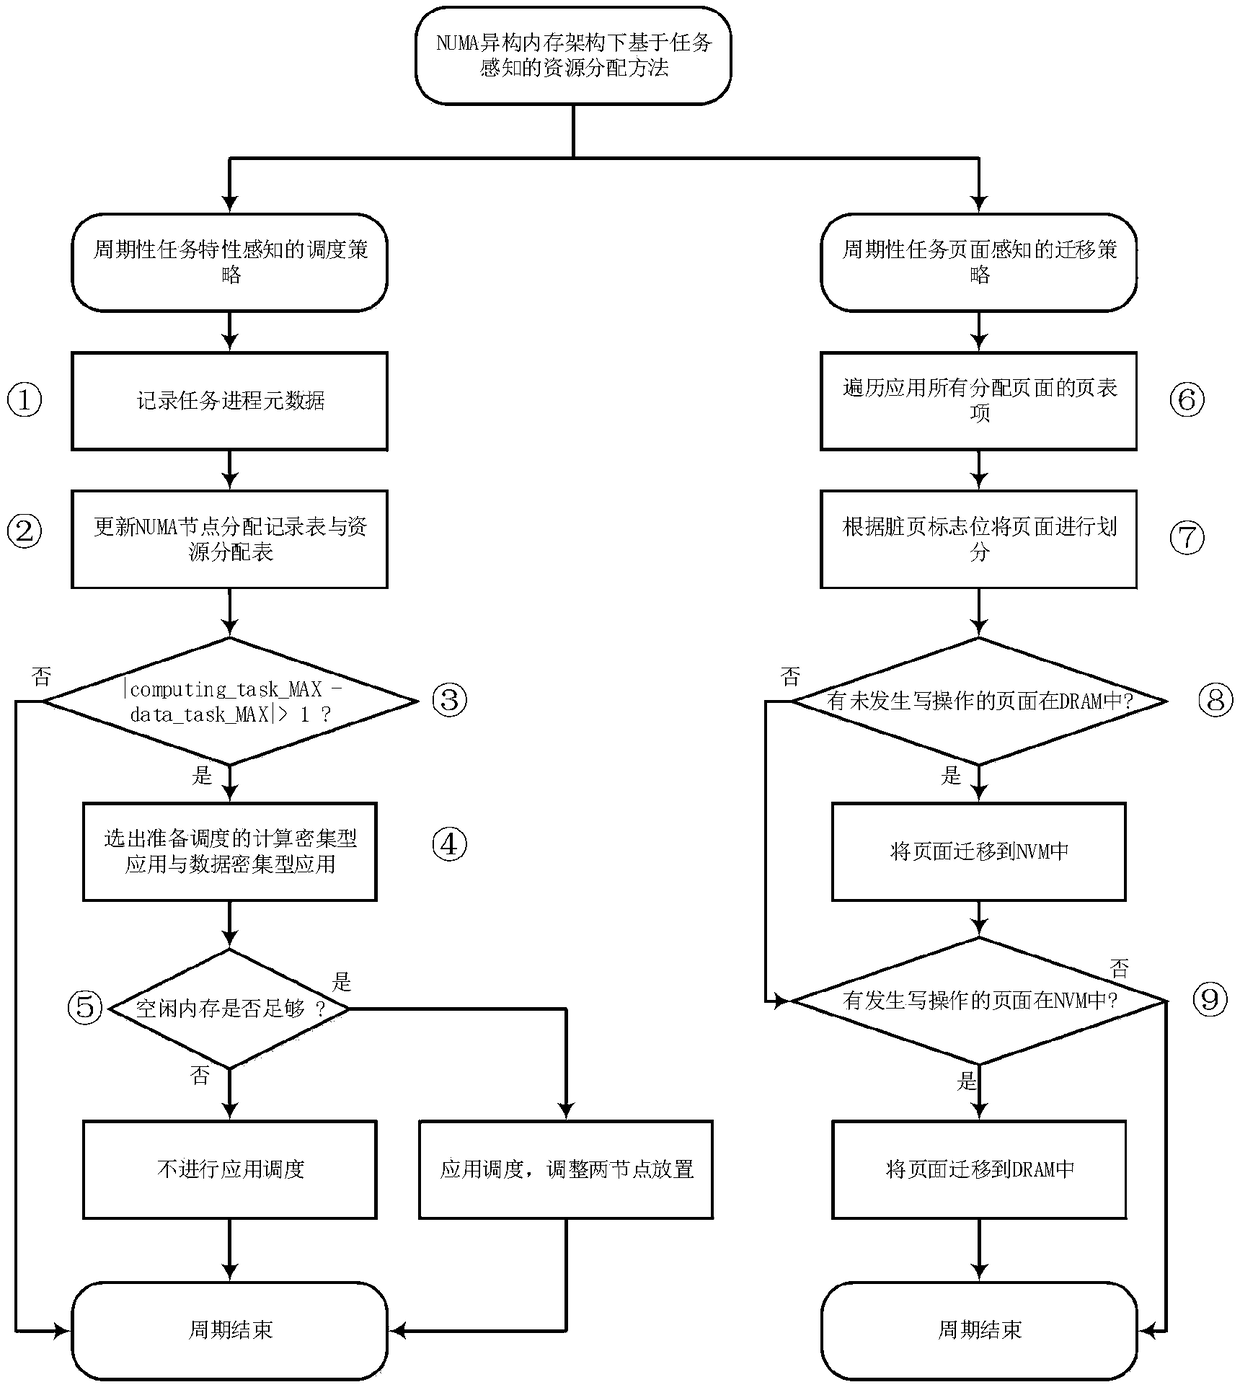 Resource allocation method based on task perception under heterogeneous memory architecture